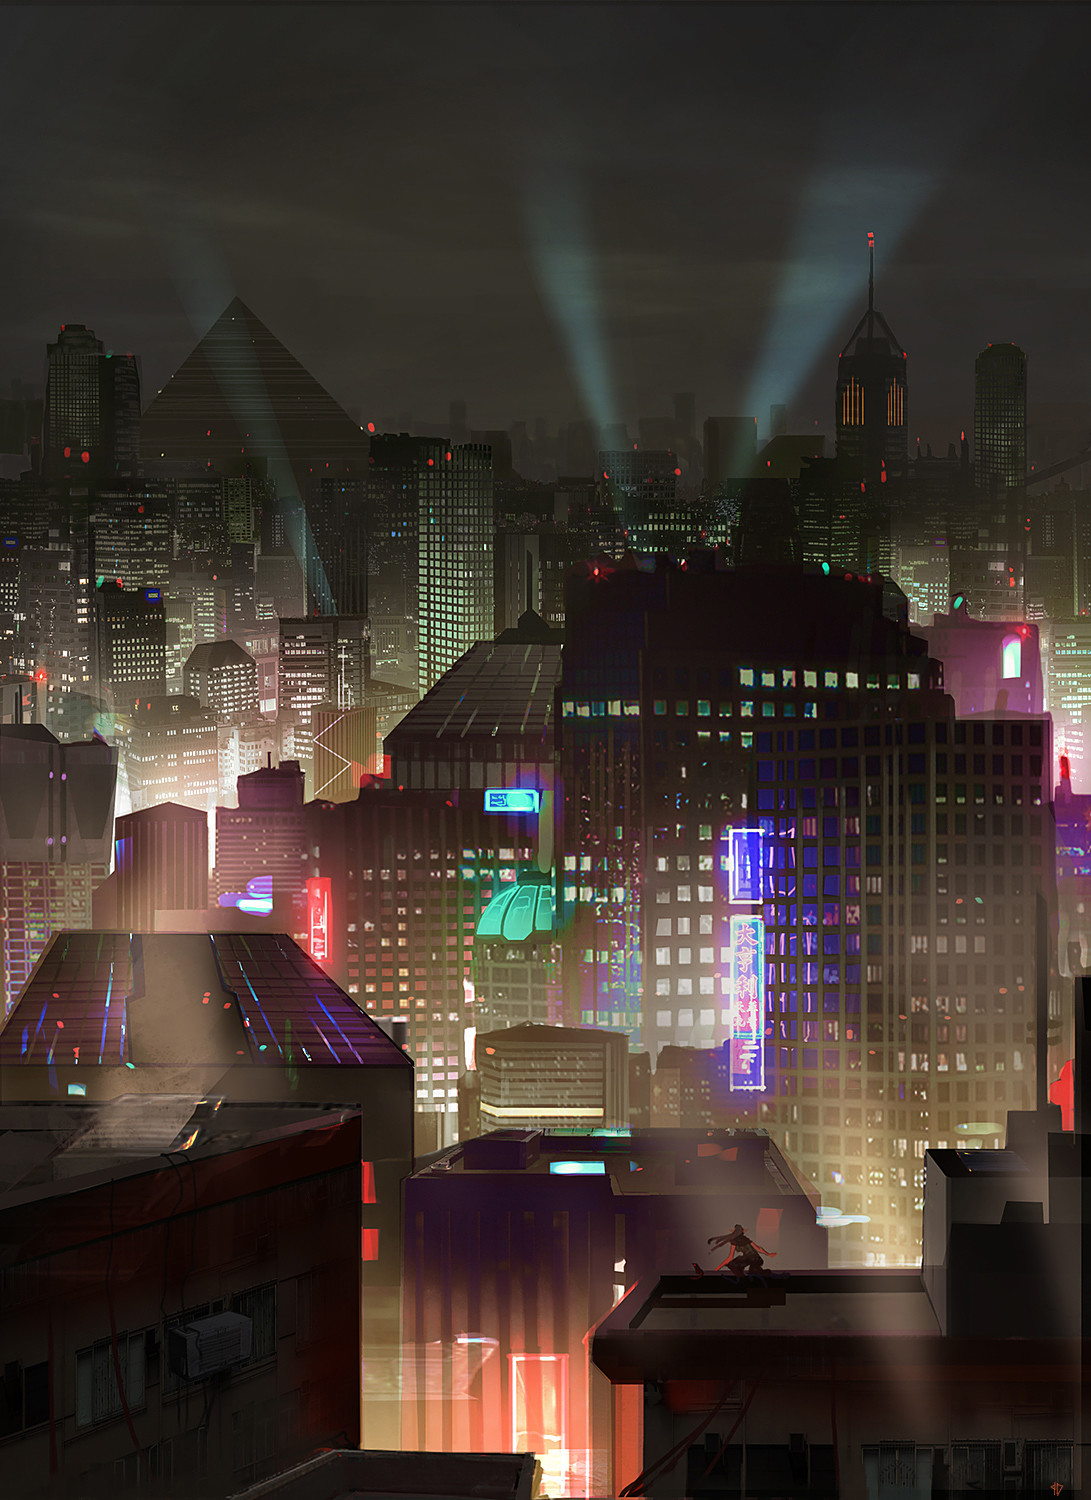 Shadowrun: Hong Kong Concept Art